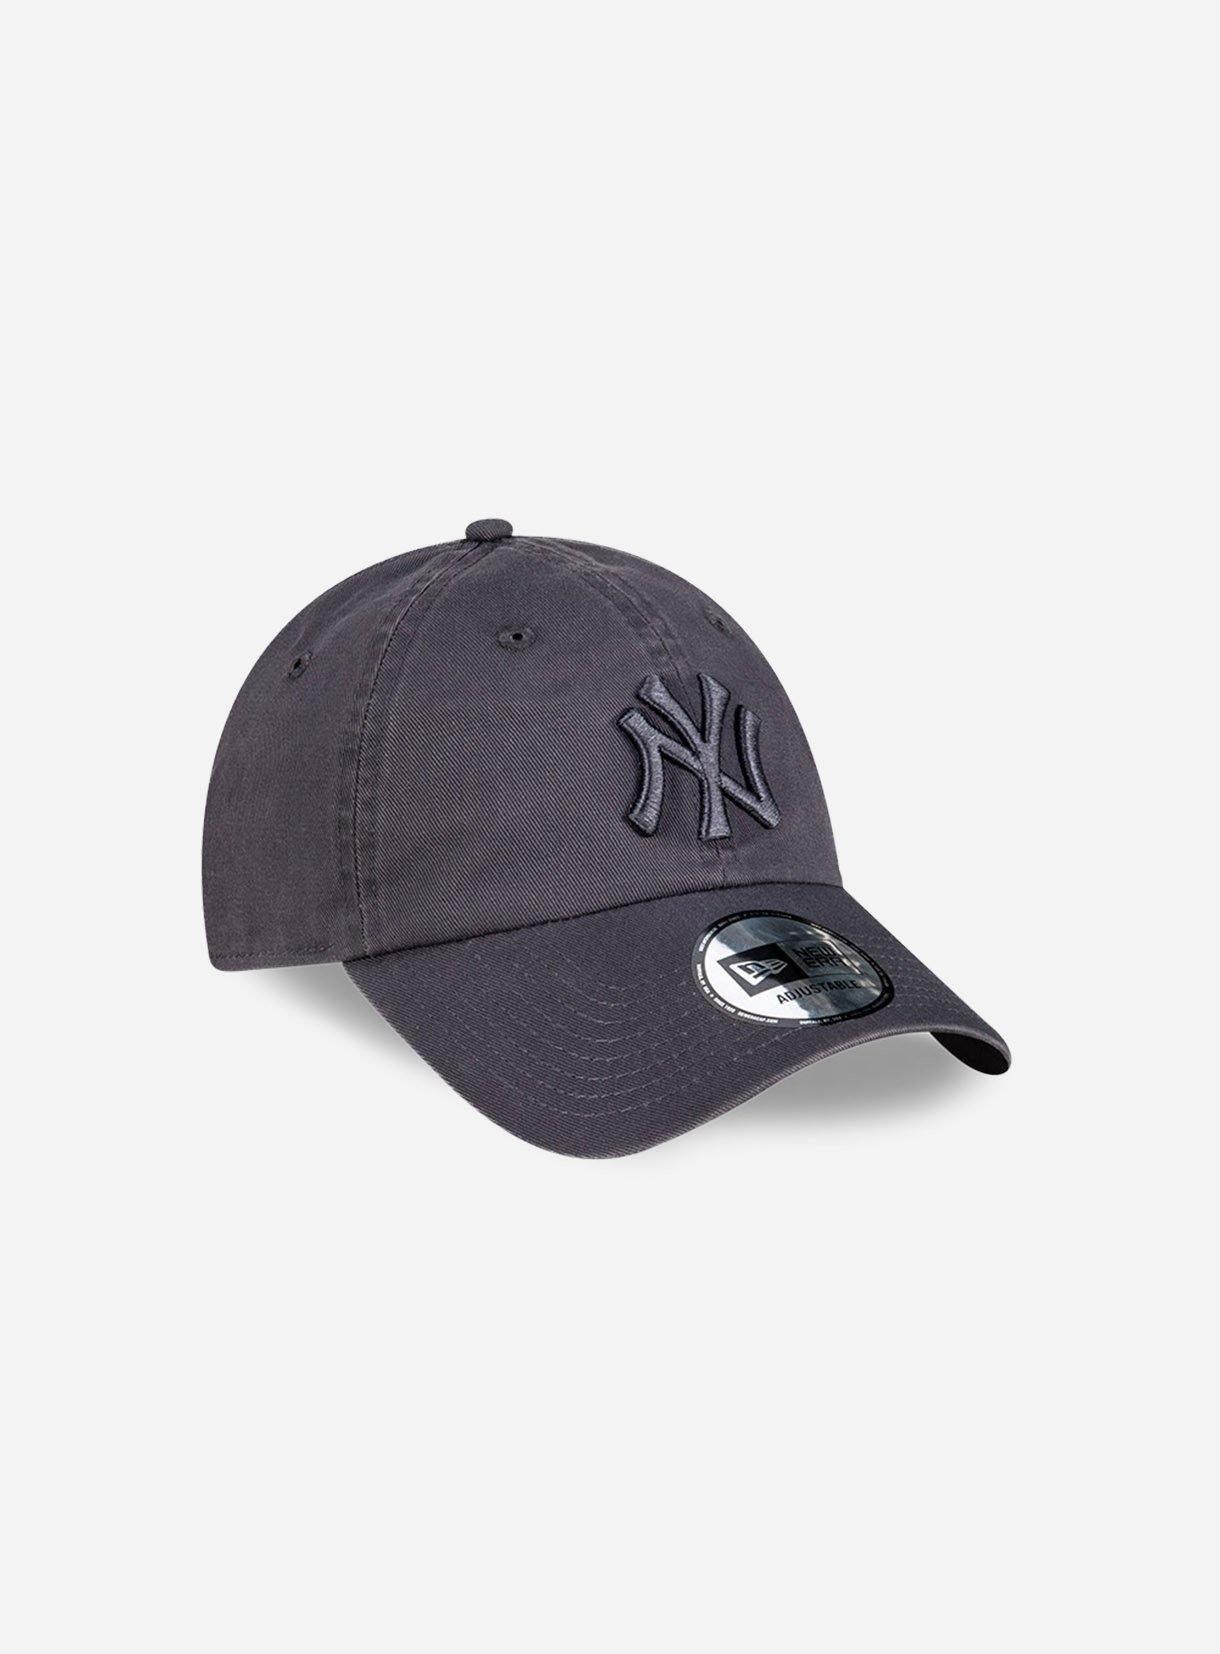 New Era New York Yankees Strapback - Challenger Streetwear